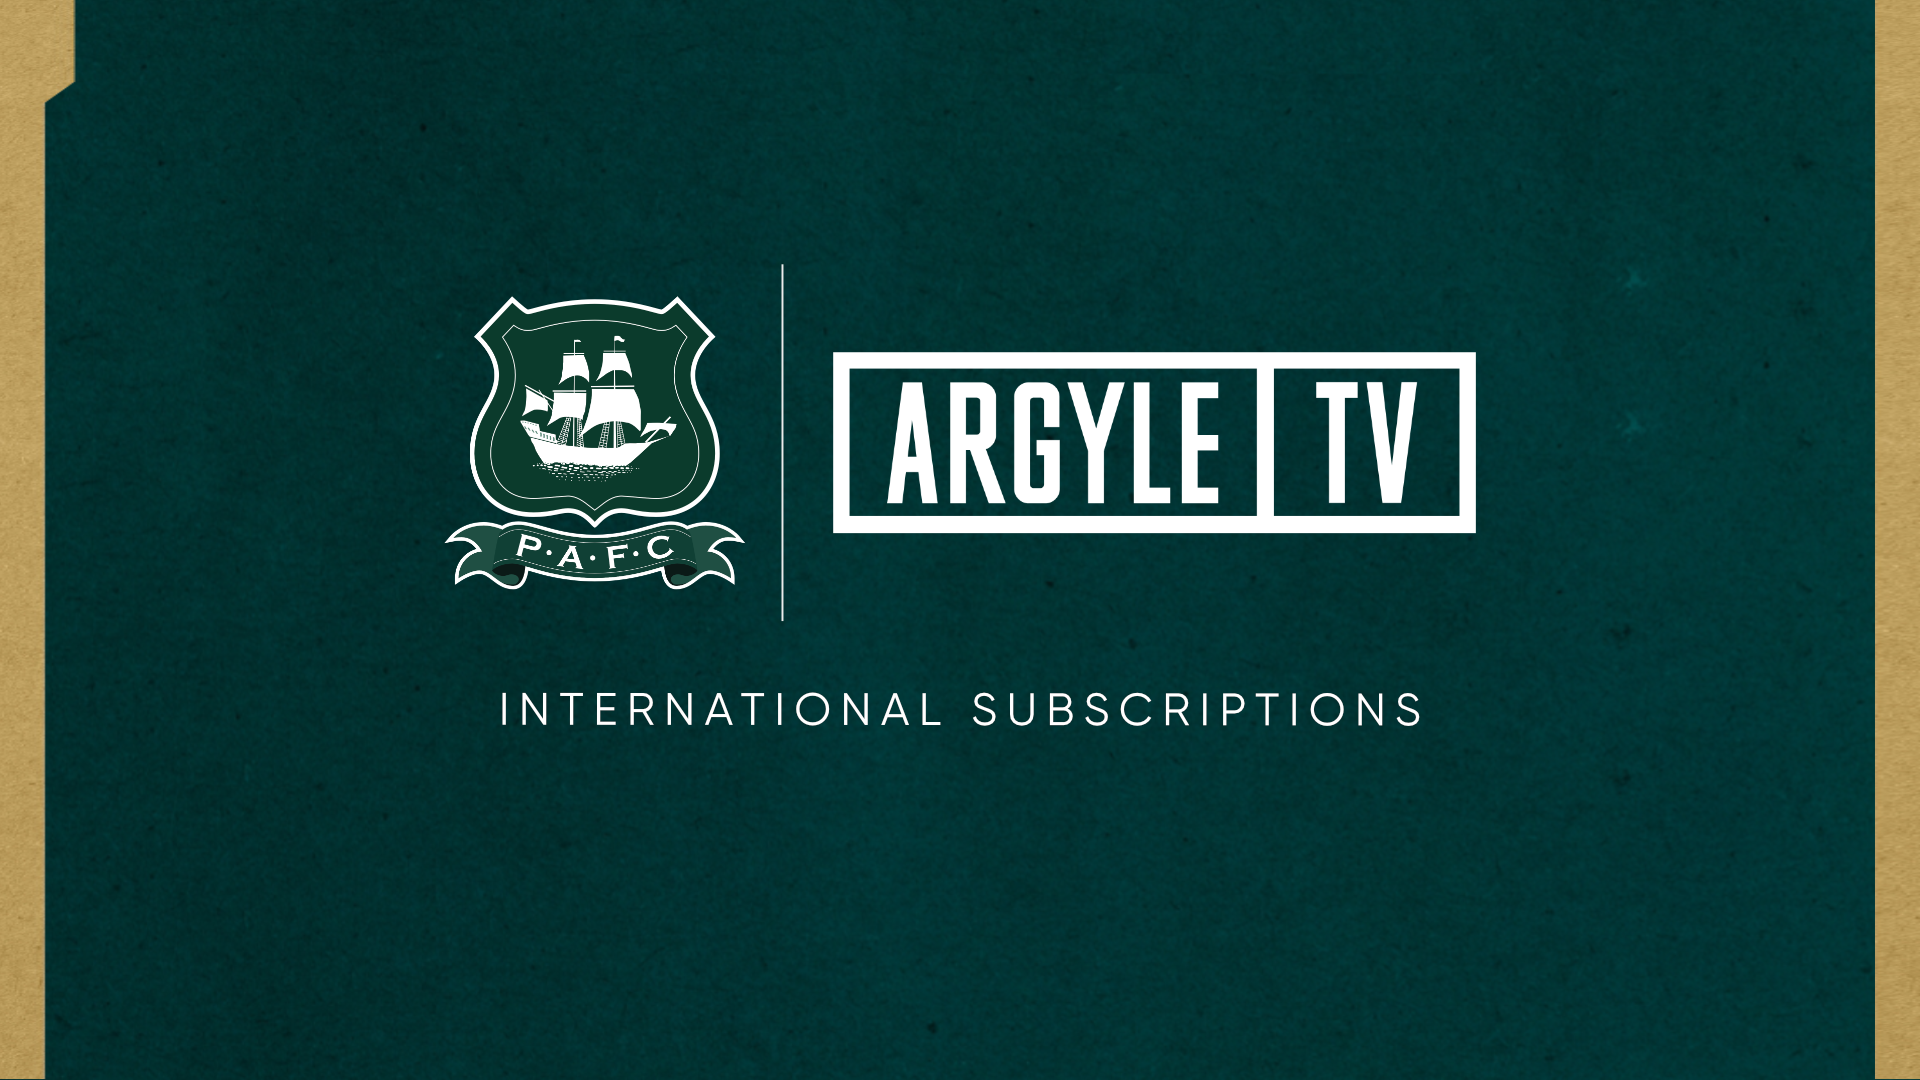 ARGYLE TV INTERNATIONAL